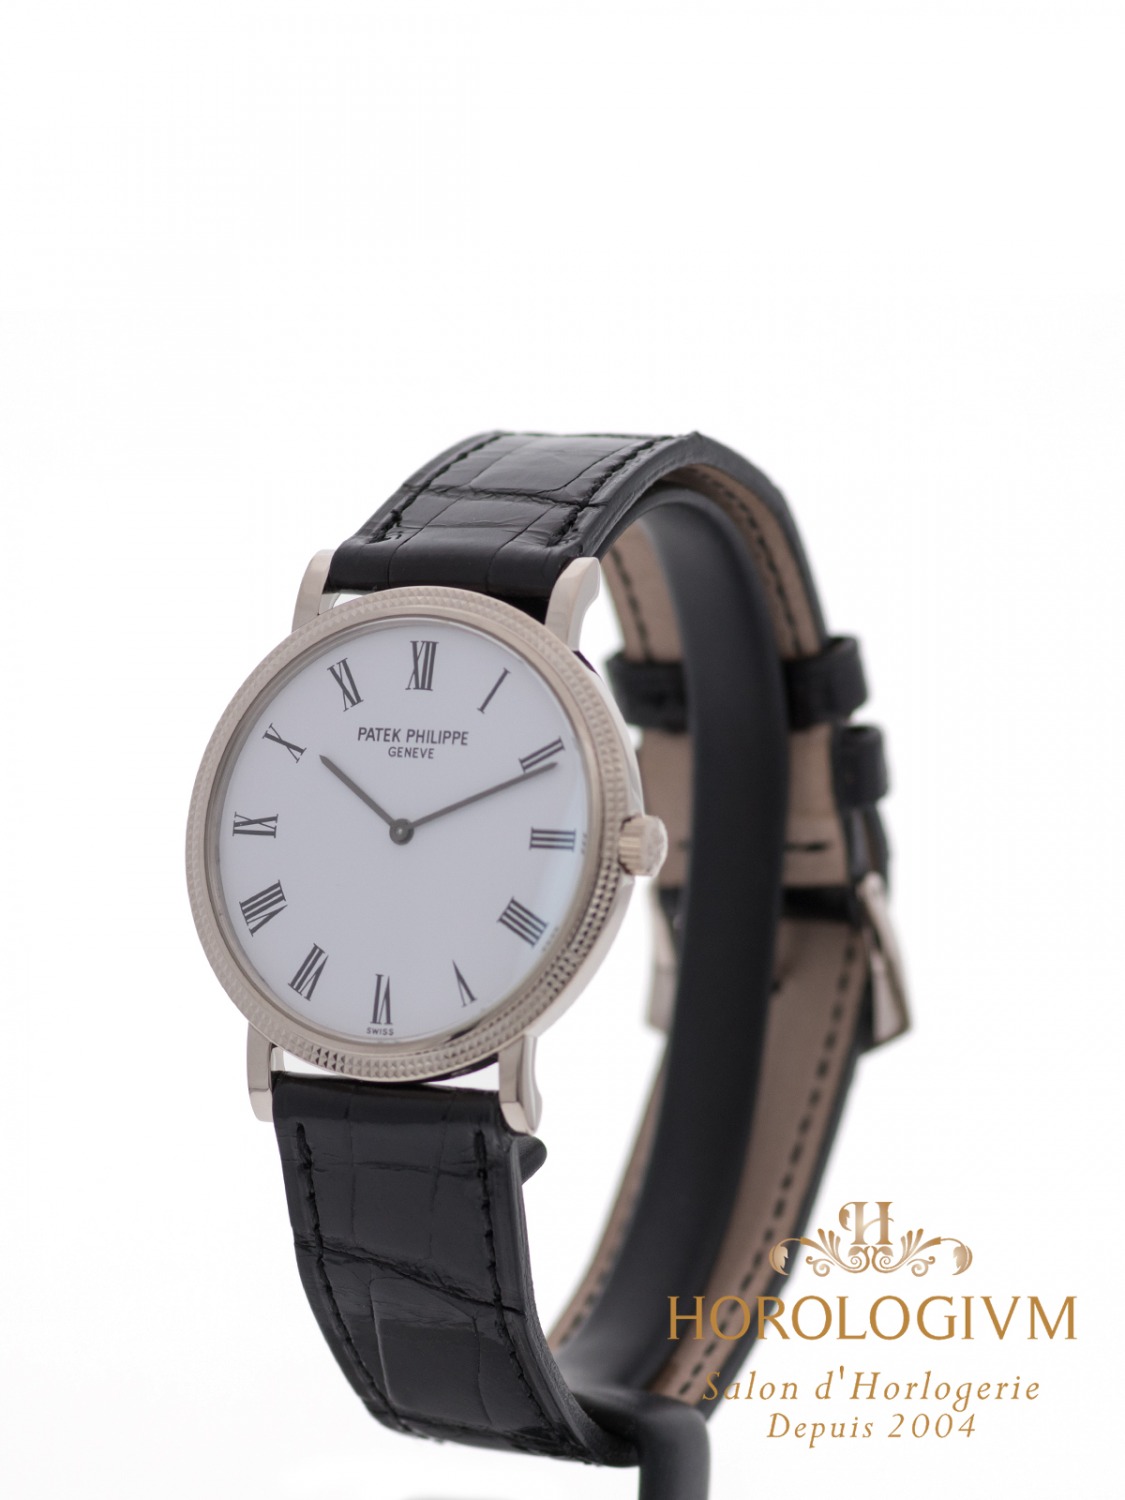 Patek Philippe Calatrava 5120G-001 watch, white gold